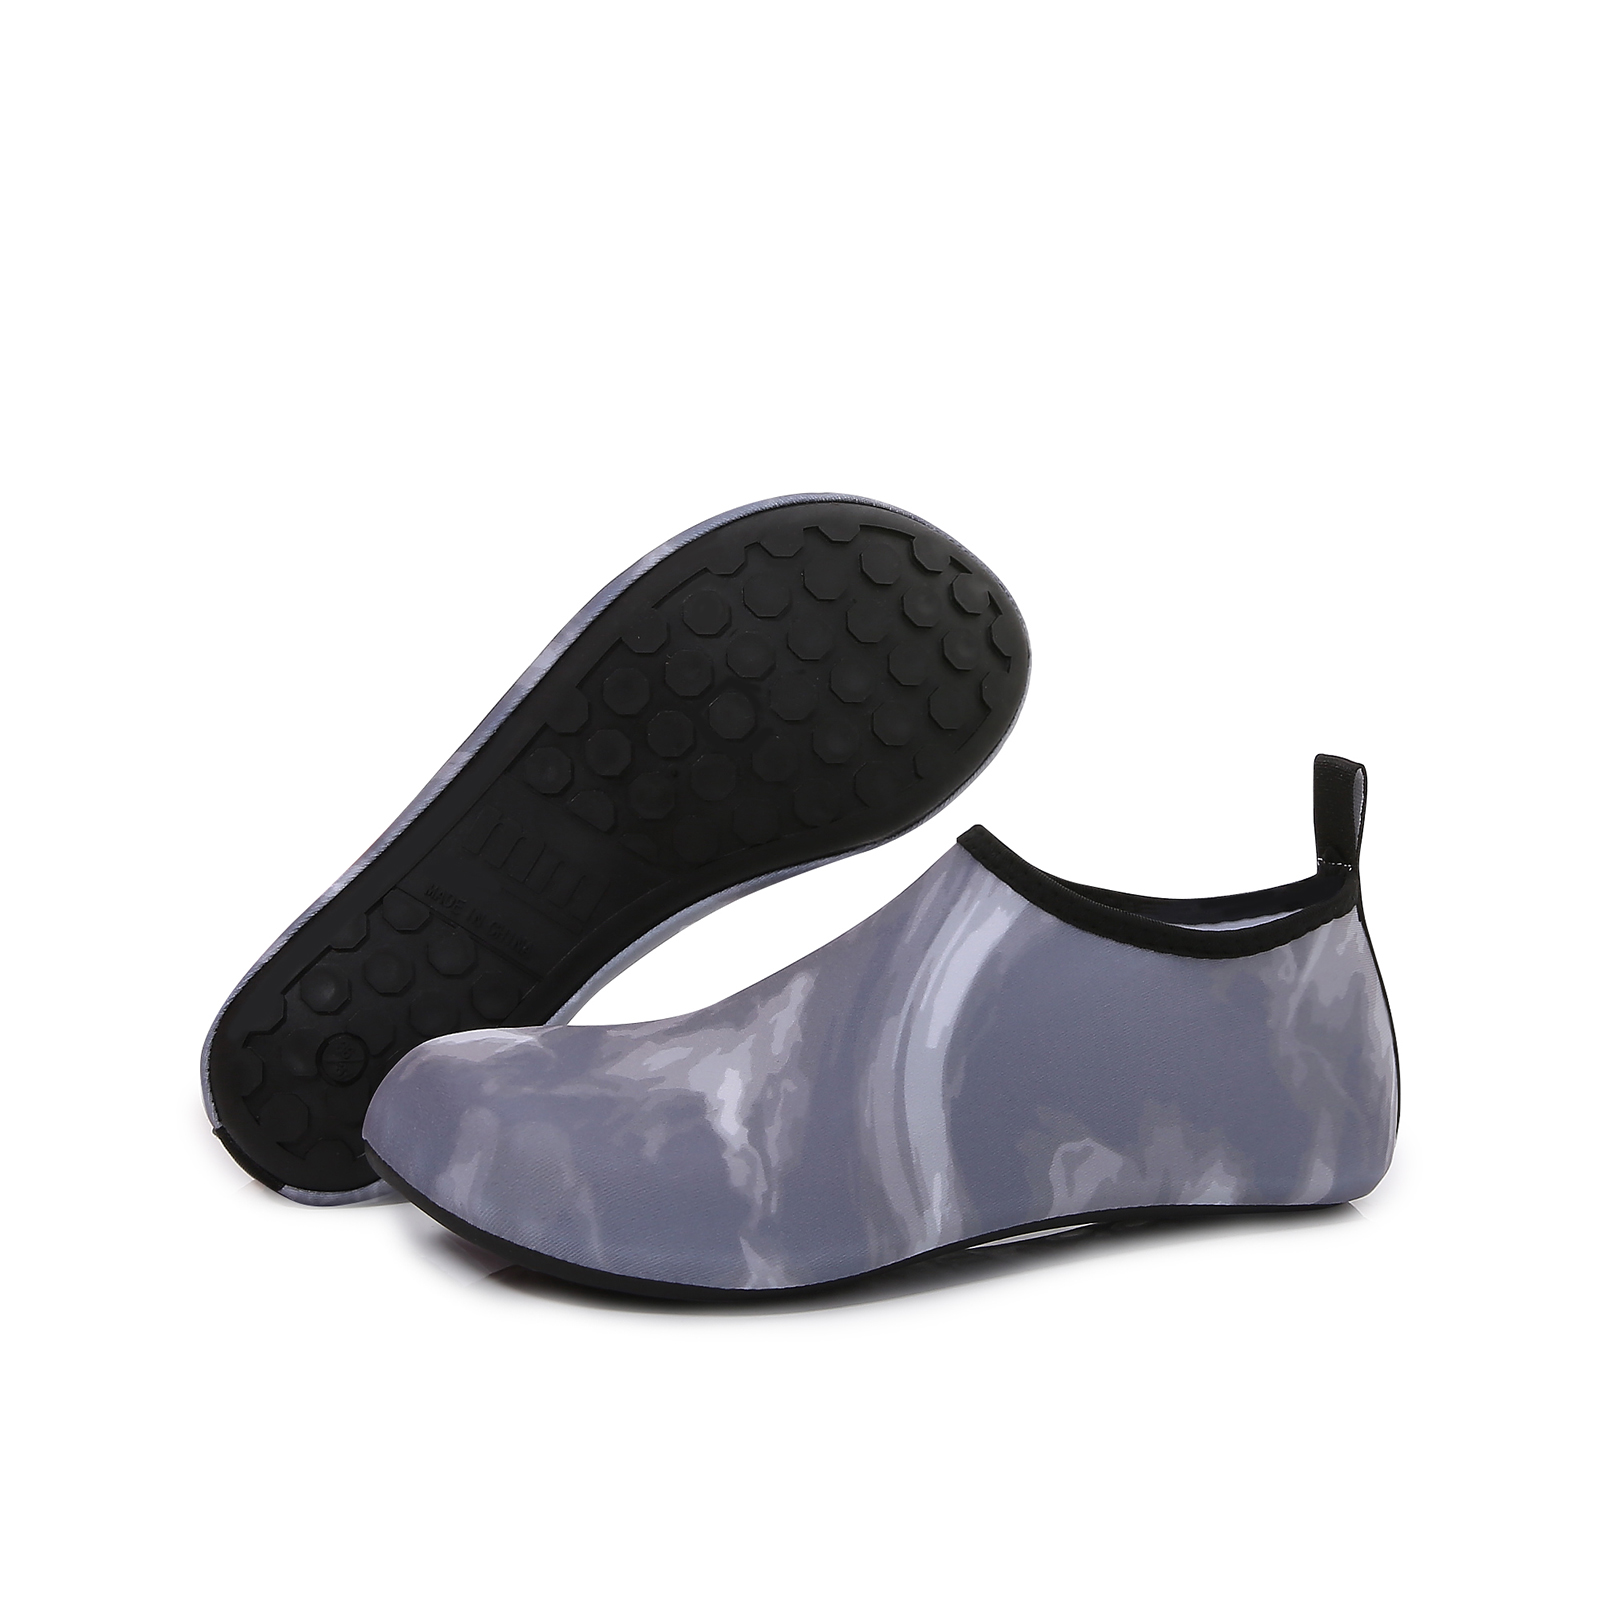 Men and Women a Slip On Barefoot Quick-Dry Beach Aqua Yoga Water Shoes (Fog/Grey, 13-14 Women/10.5-11 Men) - image 1 of 8